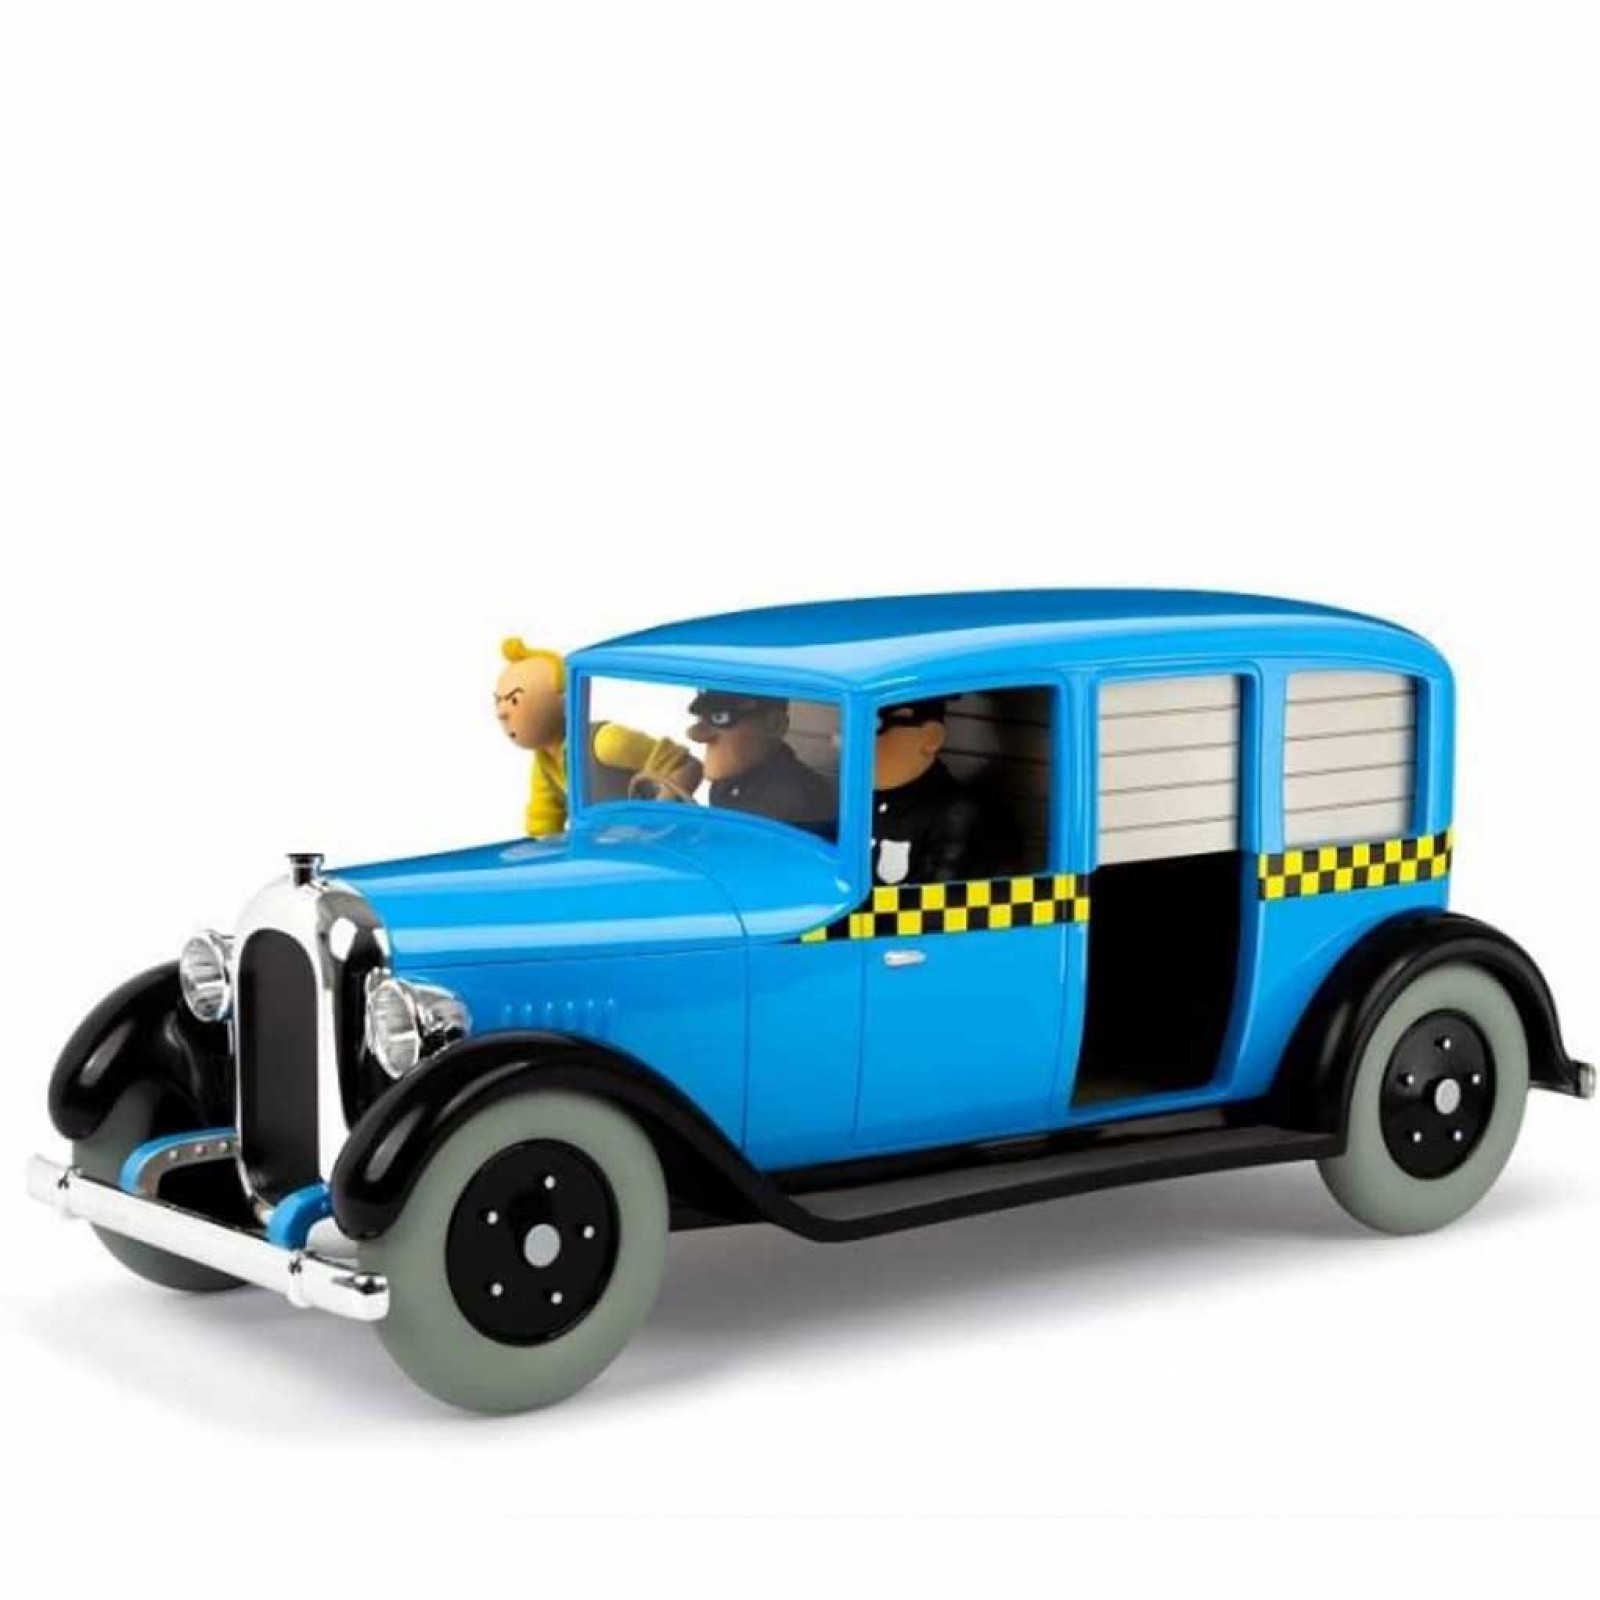 Tintin - Lot de collection 71 voitures